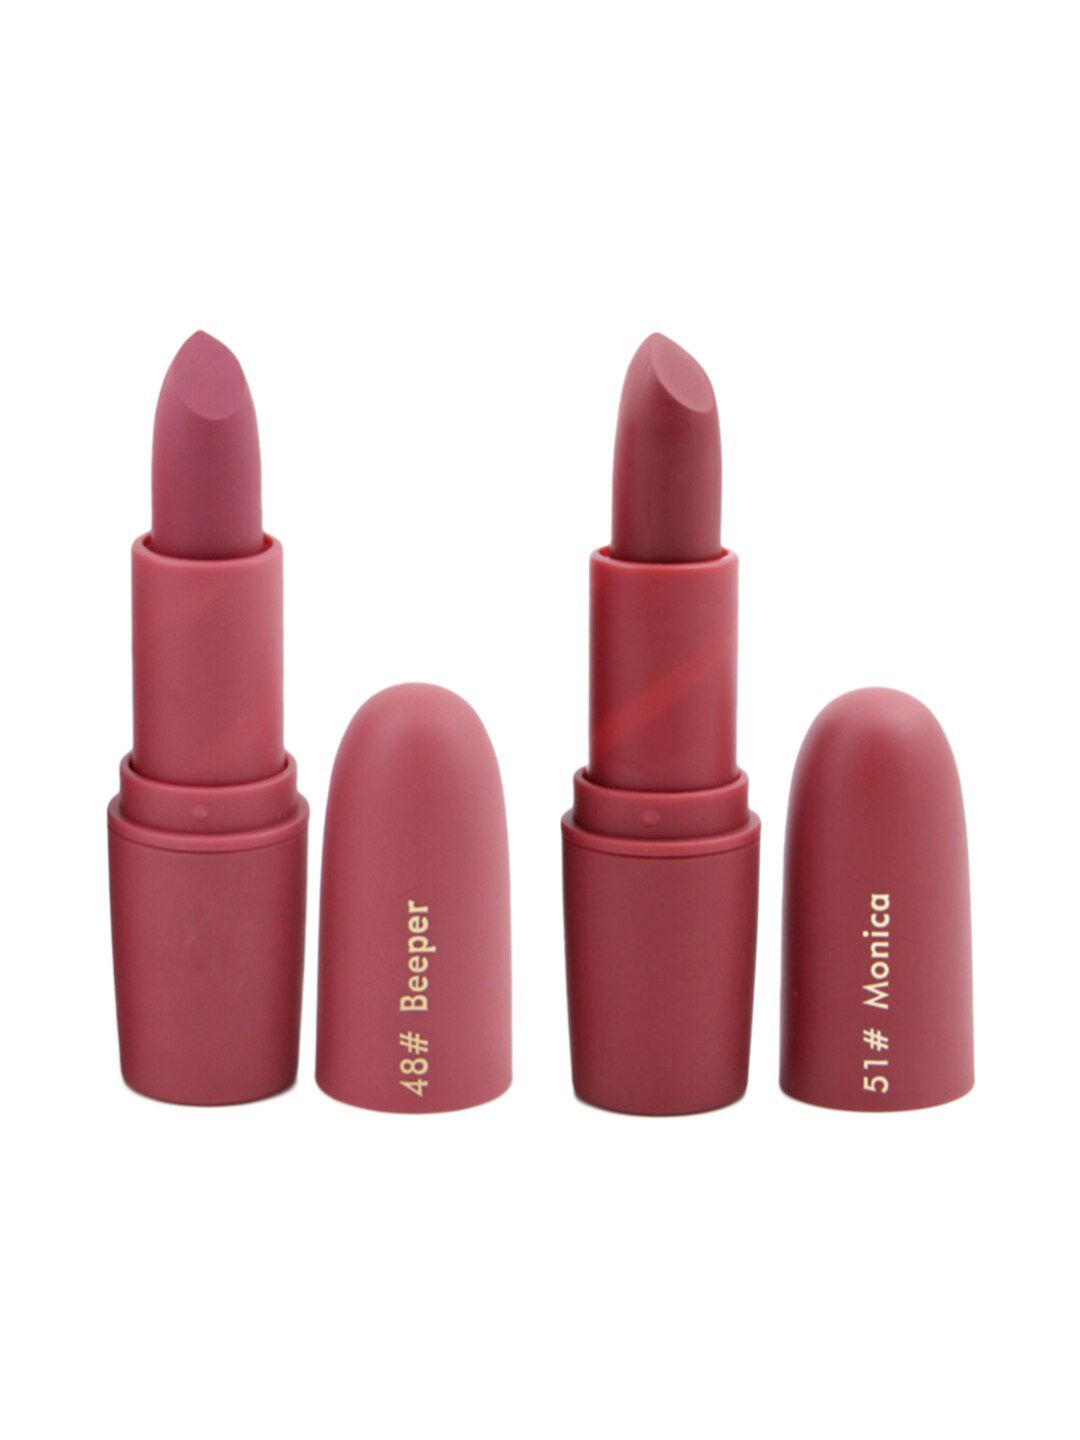 MISS ROSE Set of 2 Matte Creamy Lipsticks - Beeper 48 & Monica 51 Price in India